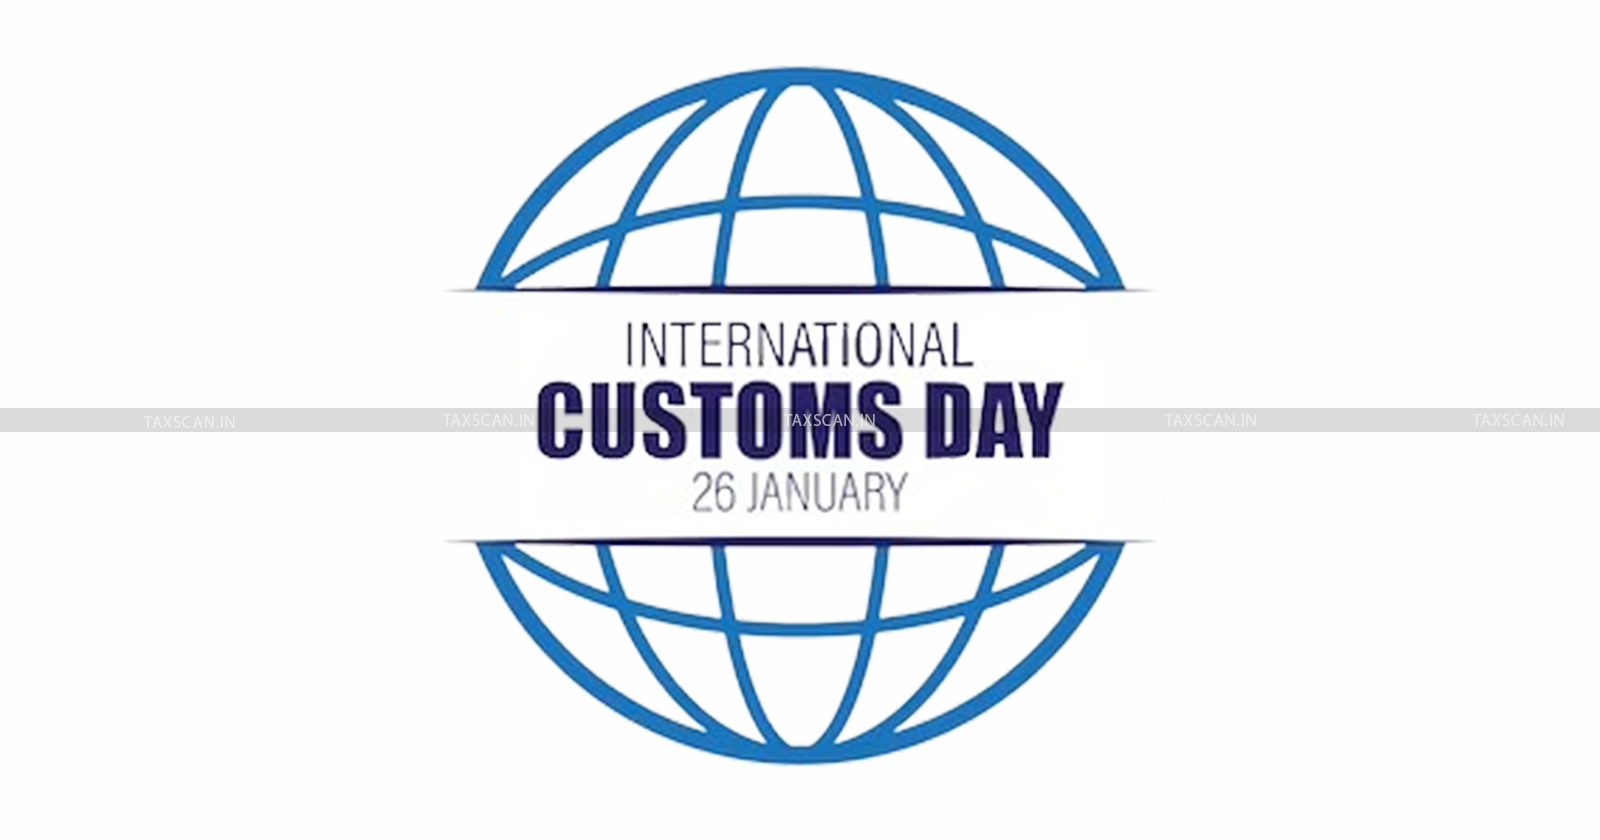 International Customs Day - Customs - Customs Day - Customs Officials - History of Customs - Customs Day Commemoration - Customs Ceremony - TAXSCAN